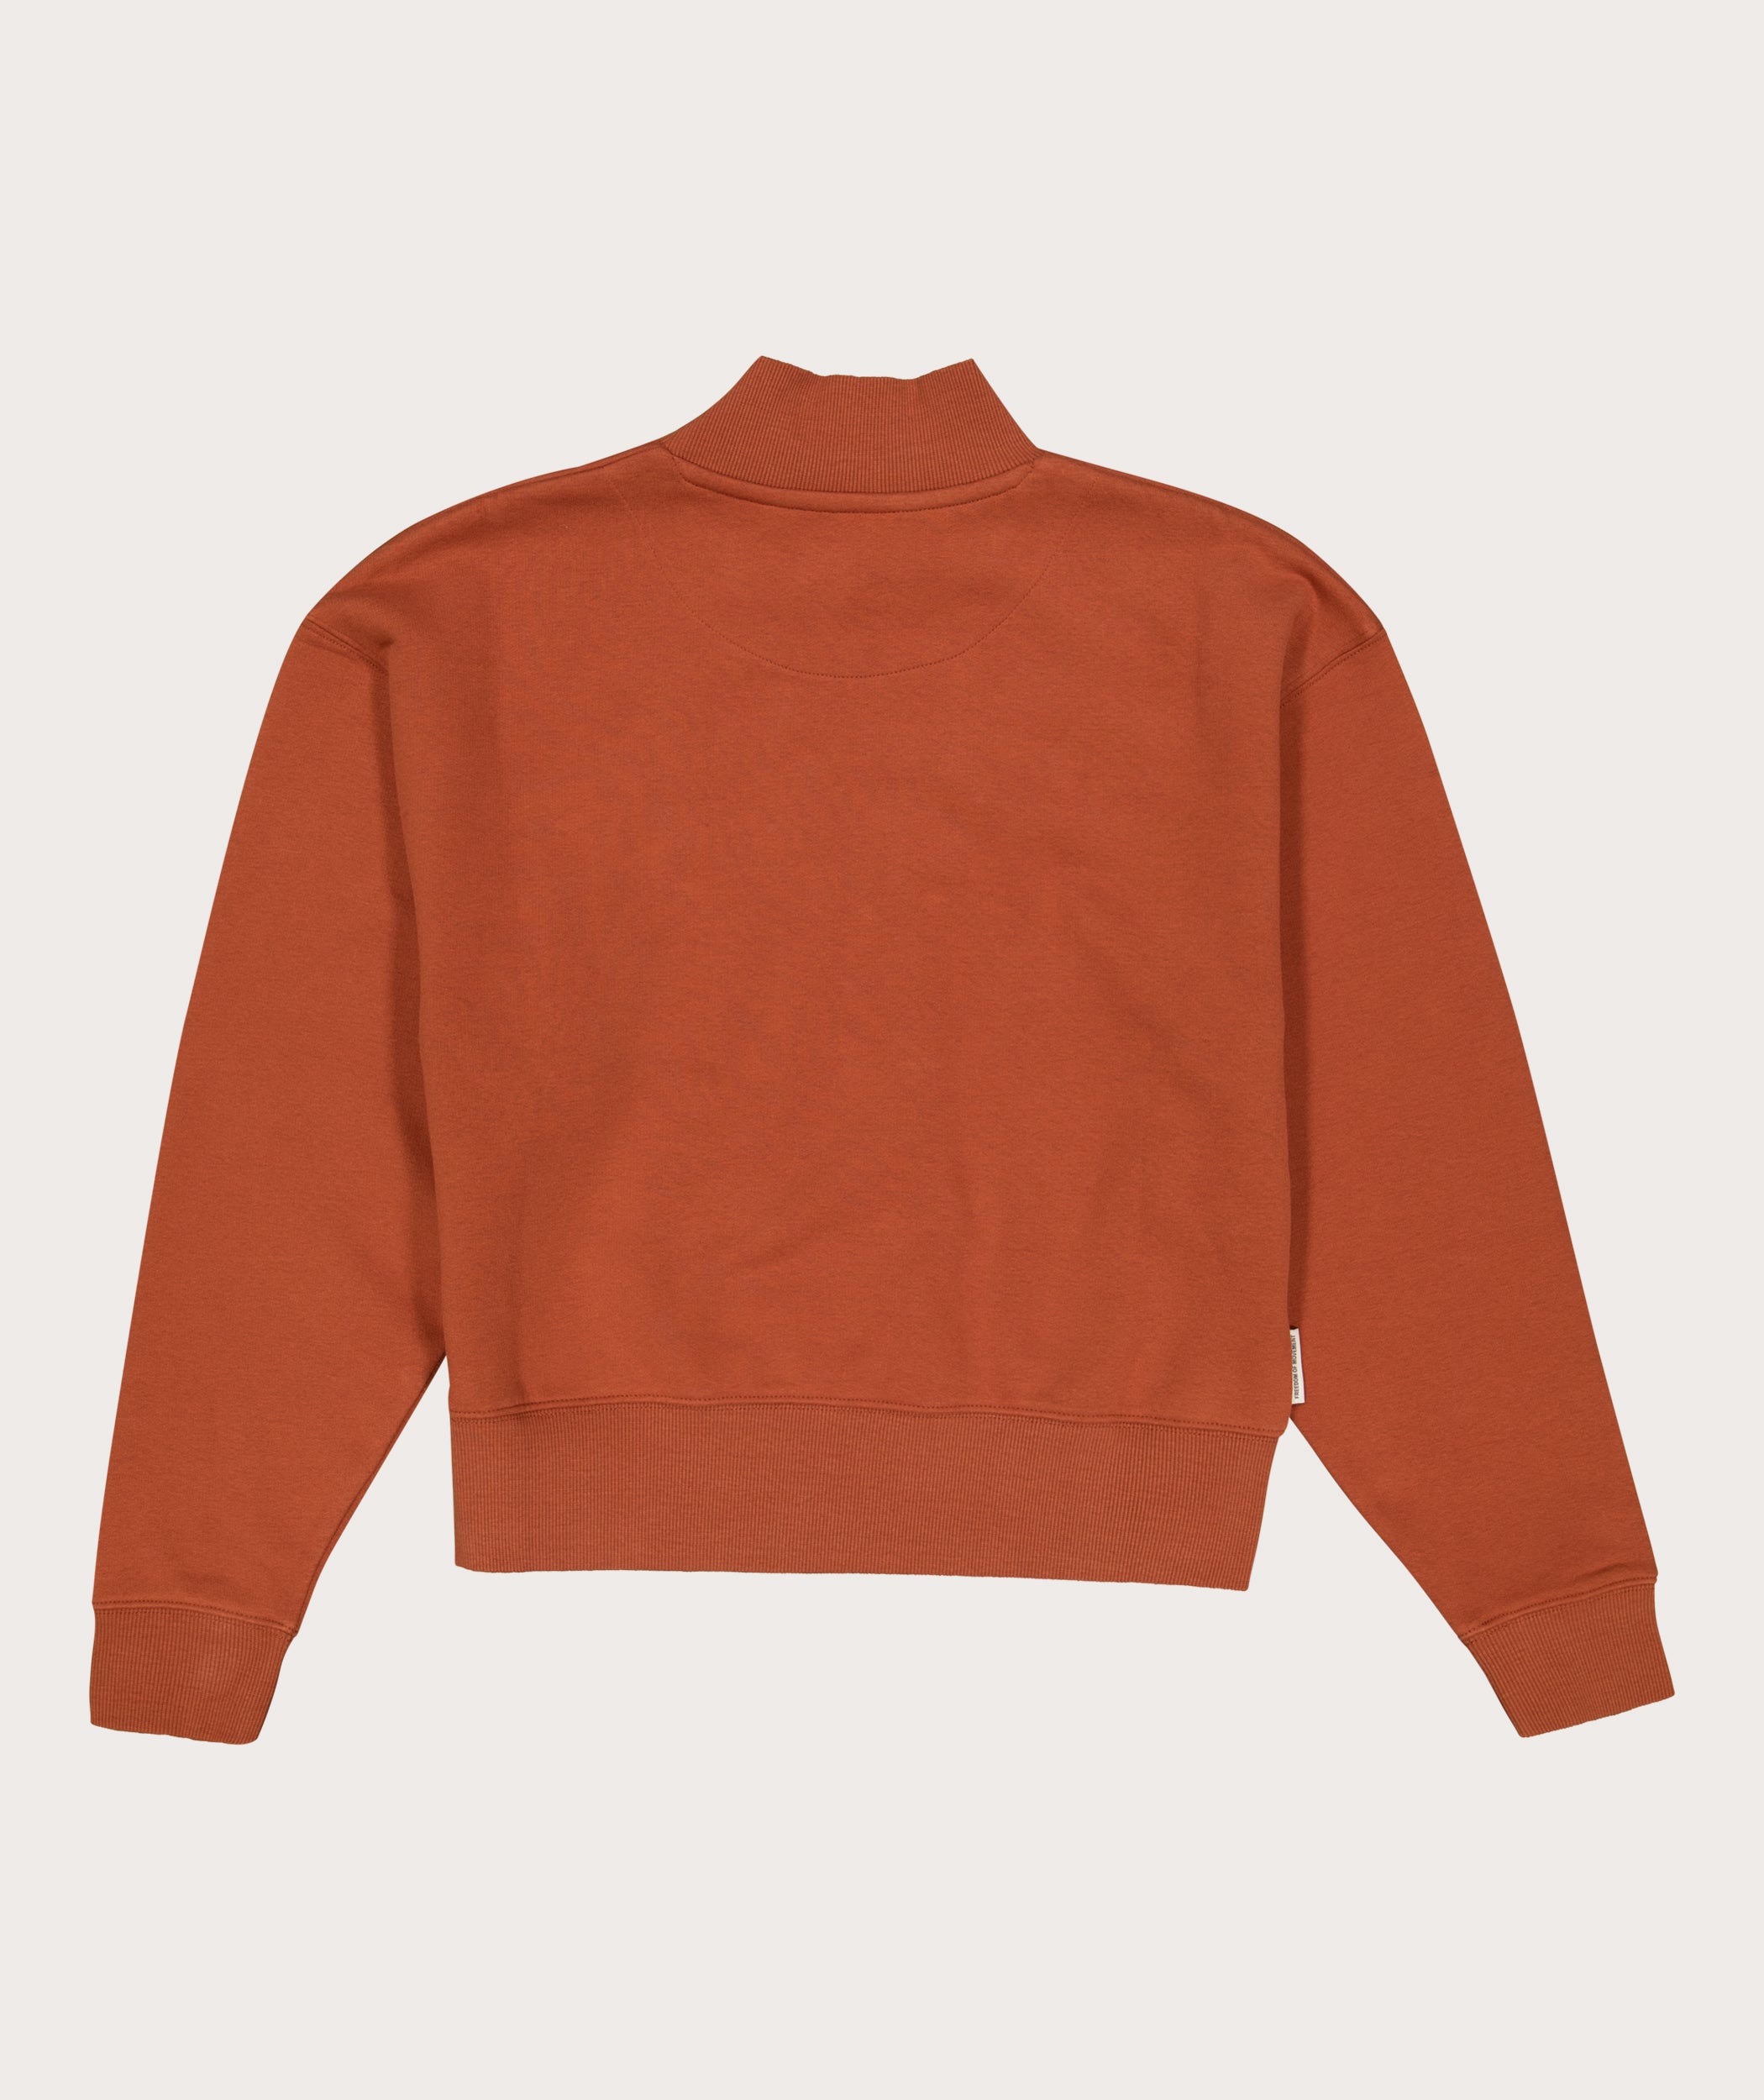 Ladies Turtle Neck Sweater - Rust